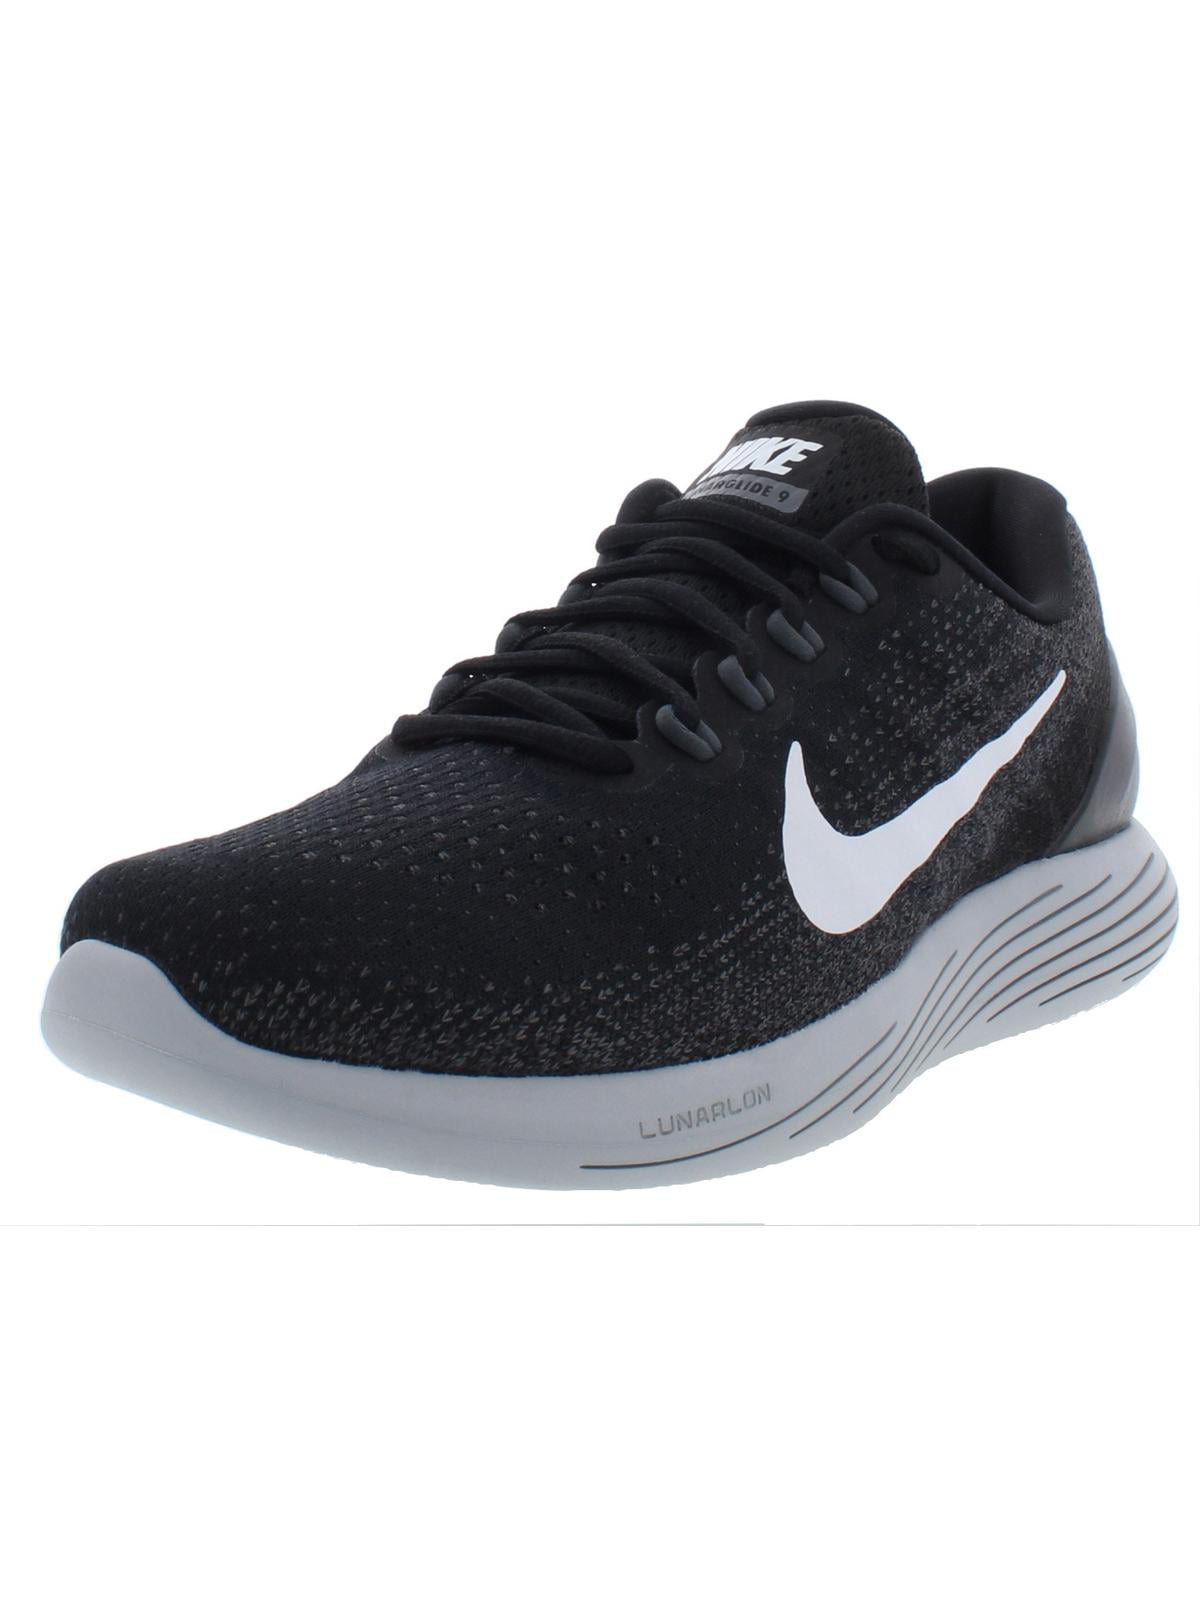 Nike 9 Athletic Running Shoes - Walmart.com